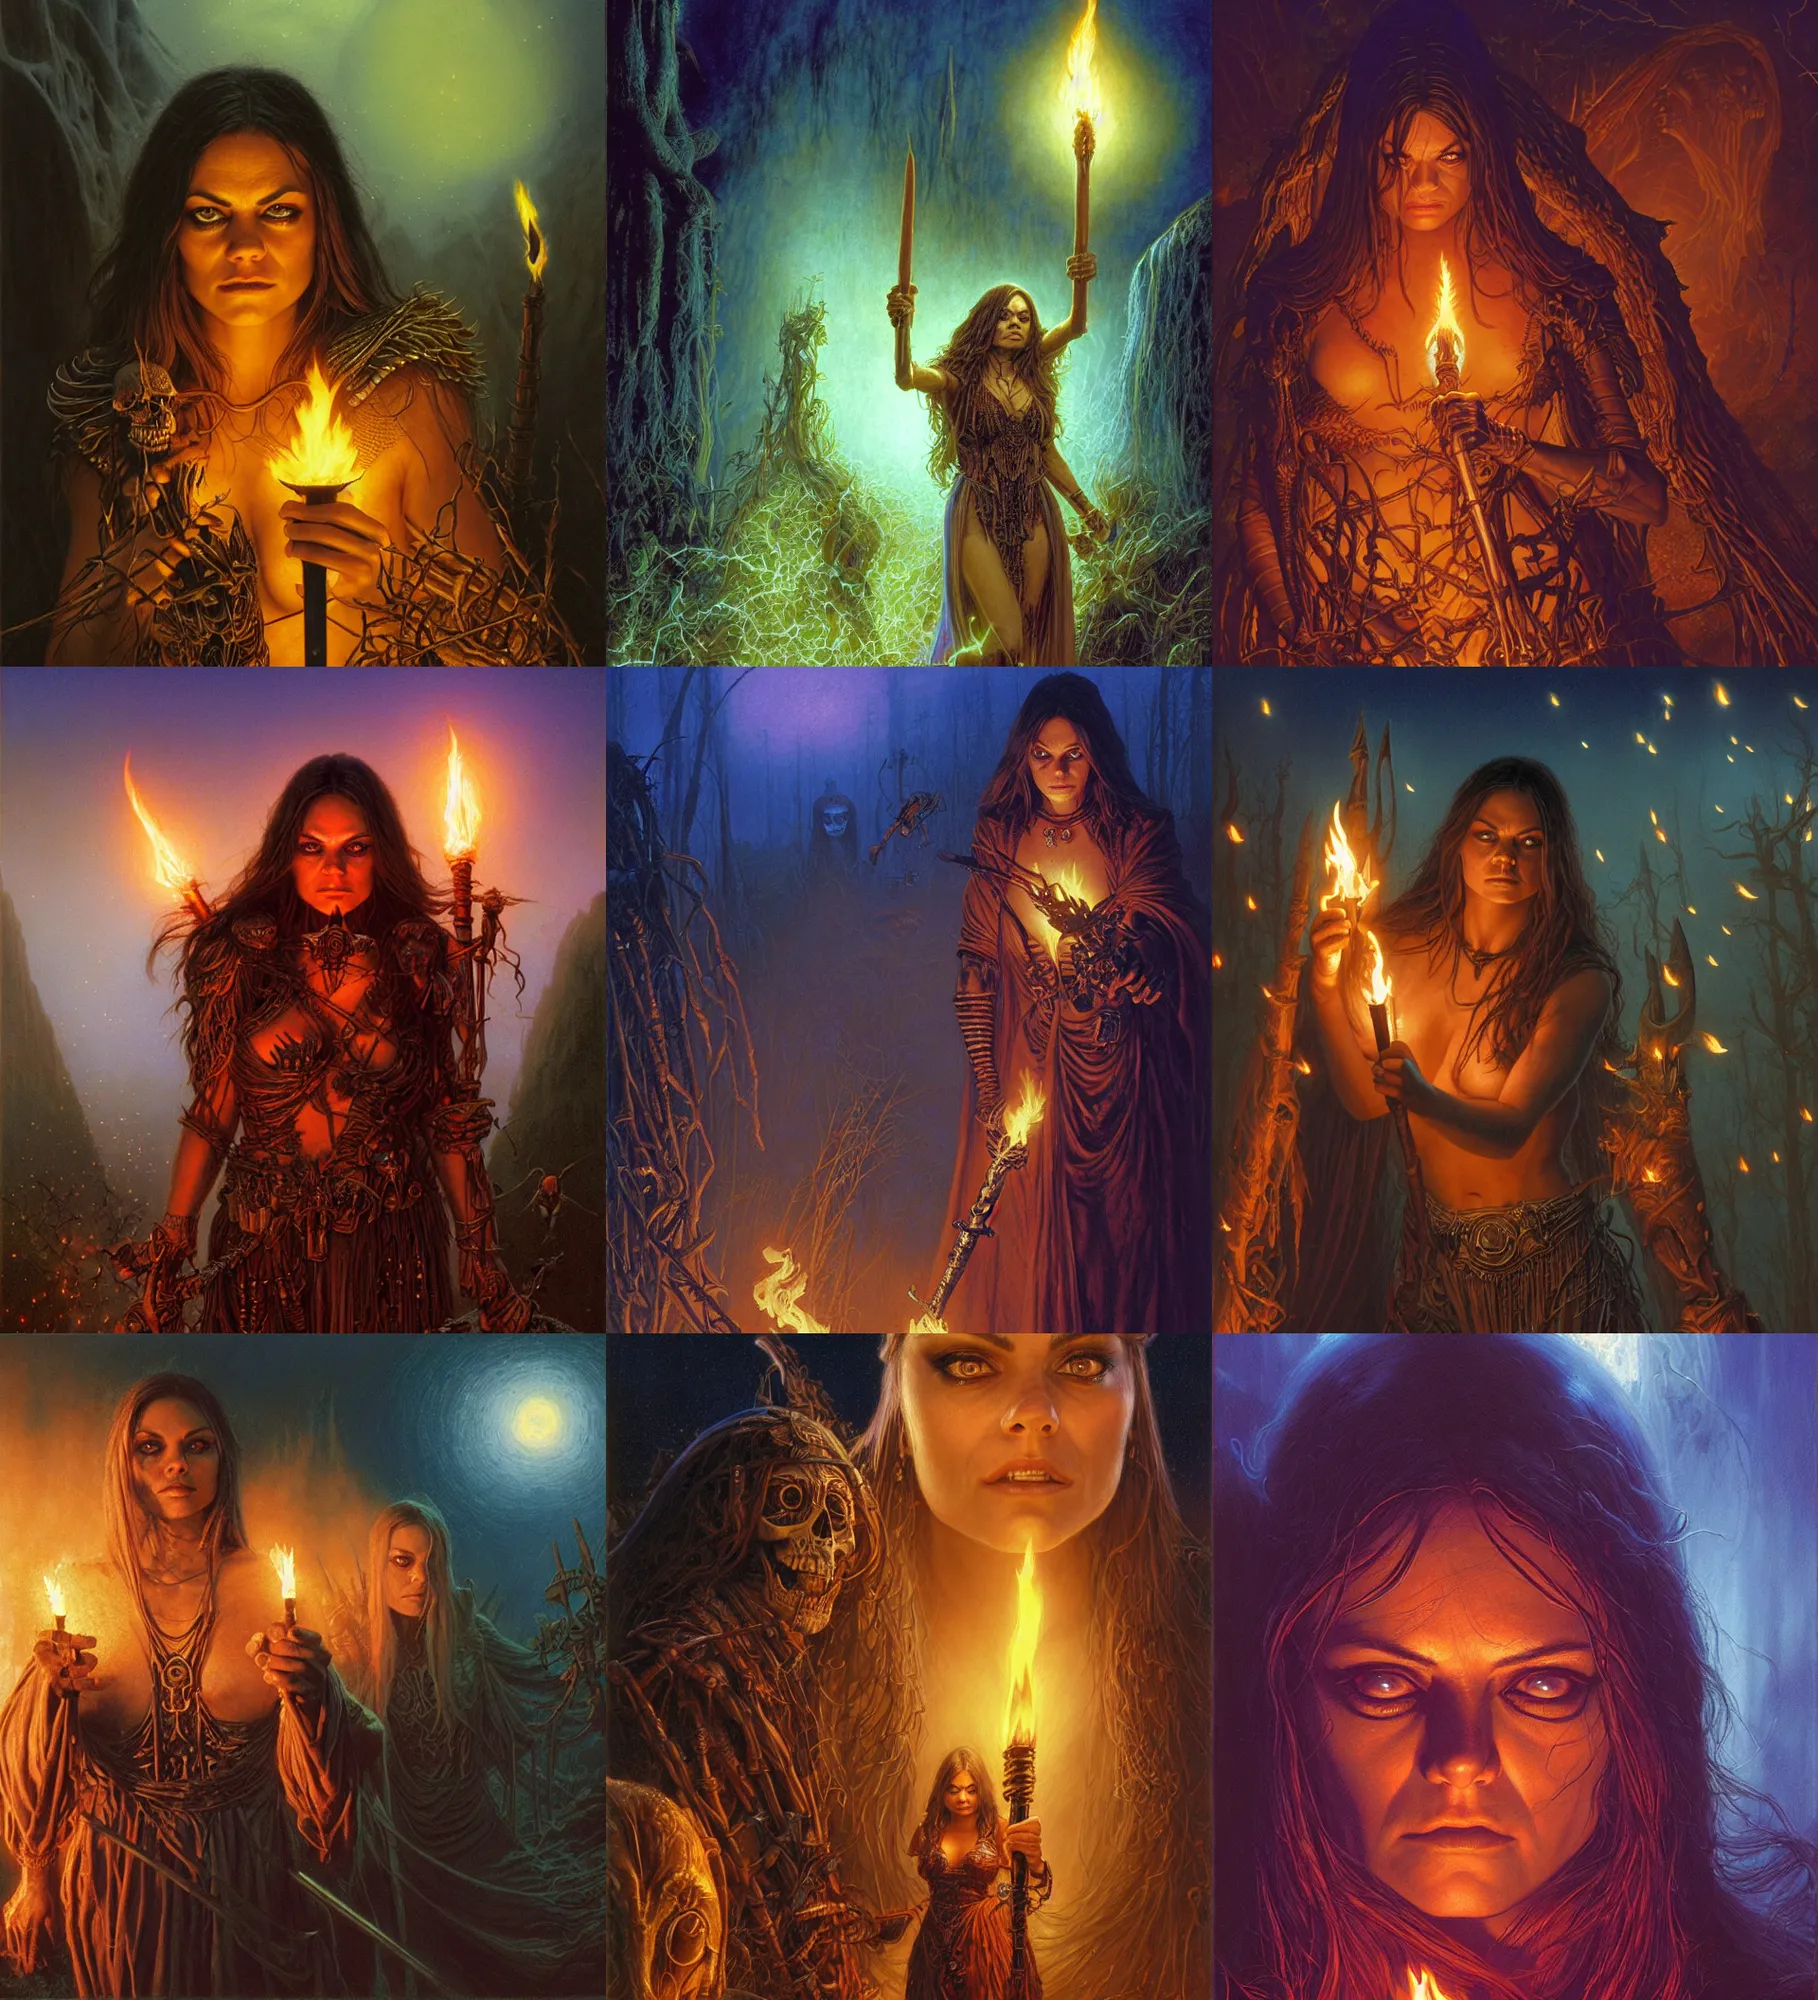 Prompt: priestess sorceress mila kunis action close - up portrait as skeletons approach, fog, fireflies, torch light, donato giancola, tim hildebrandt, wayne barlow, bruce pennington, larry elmore